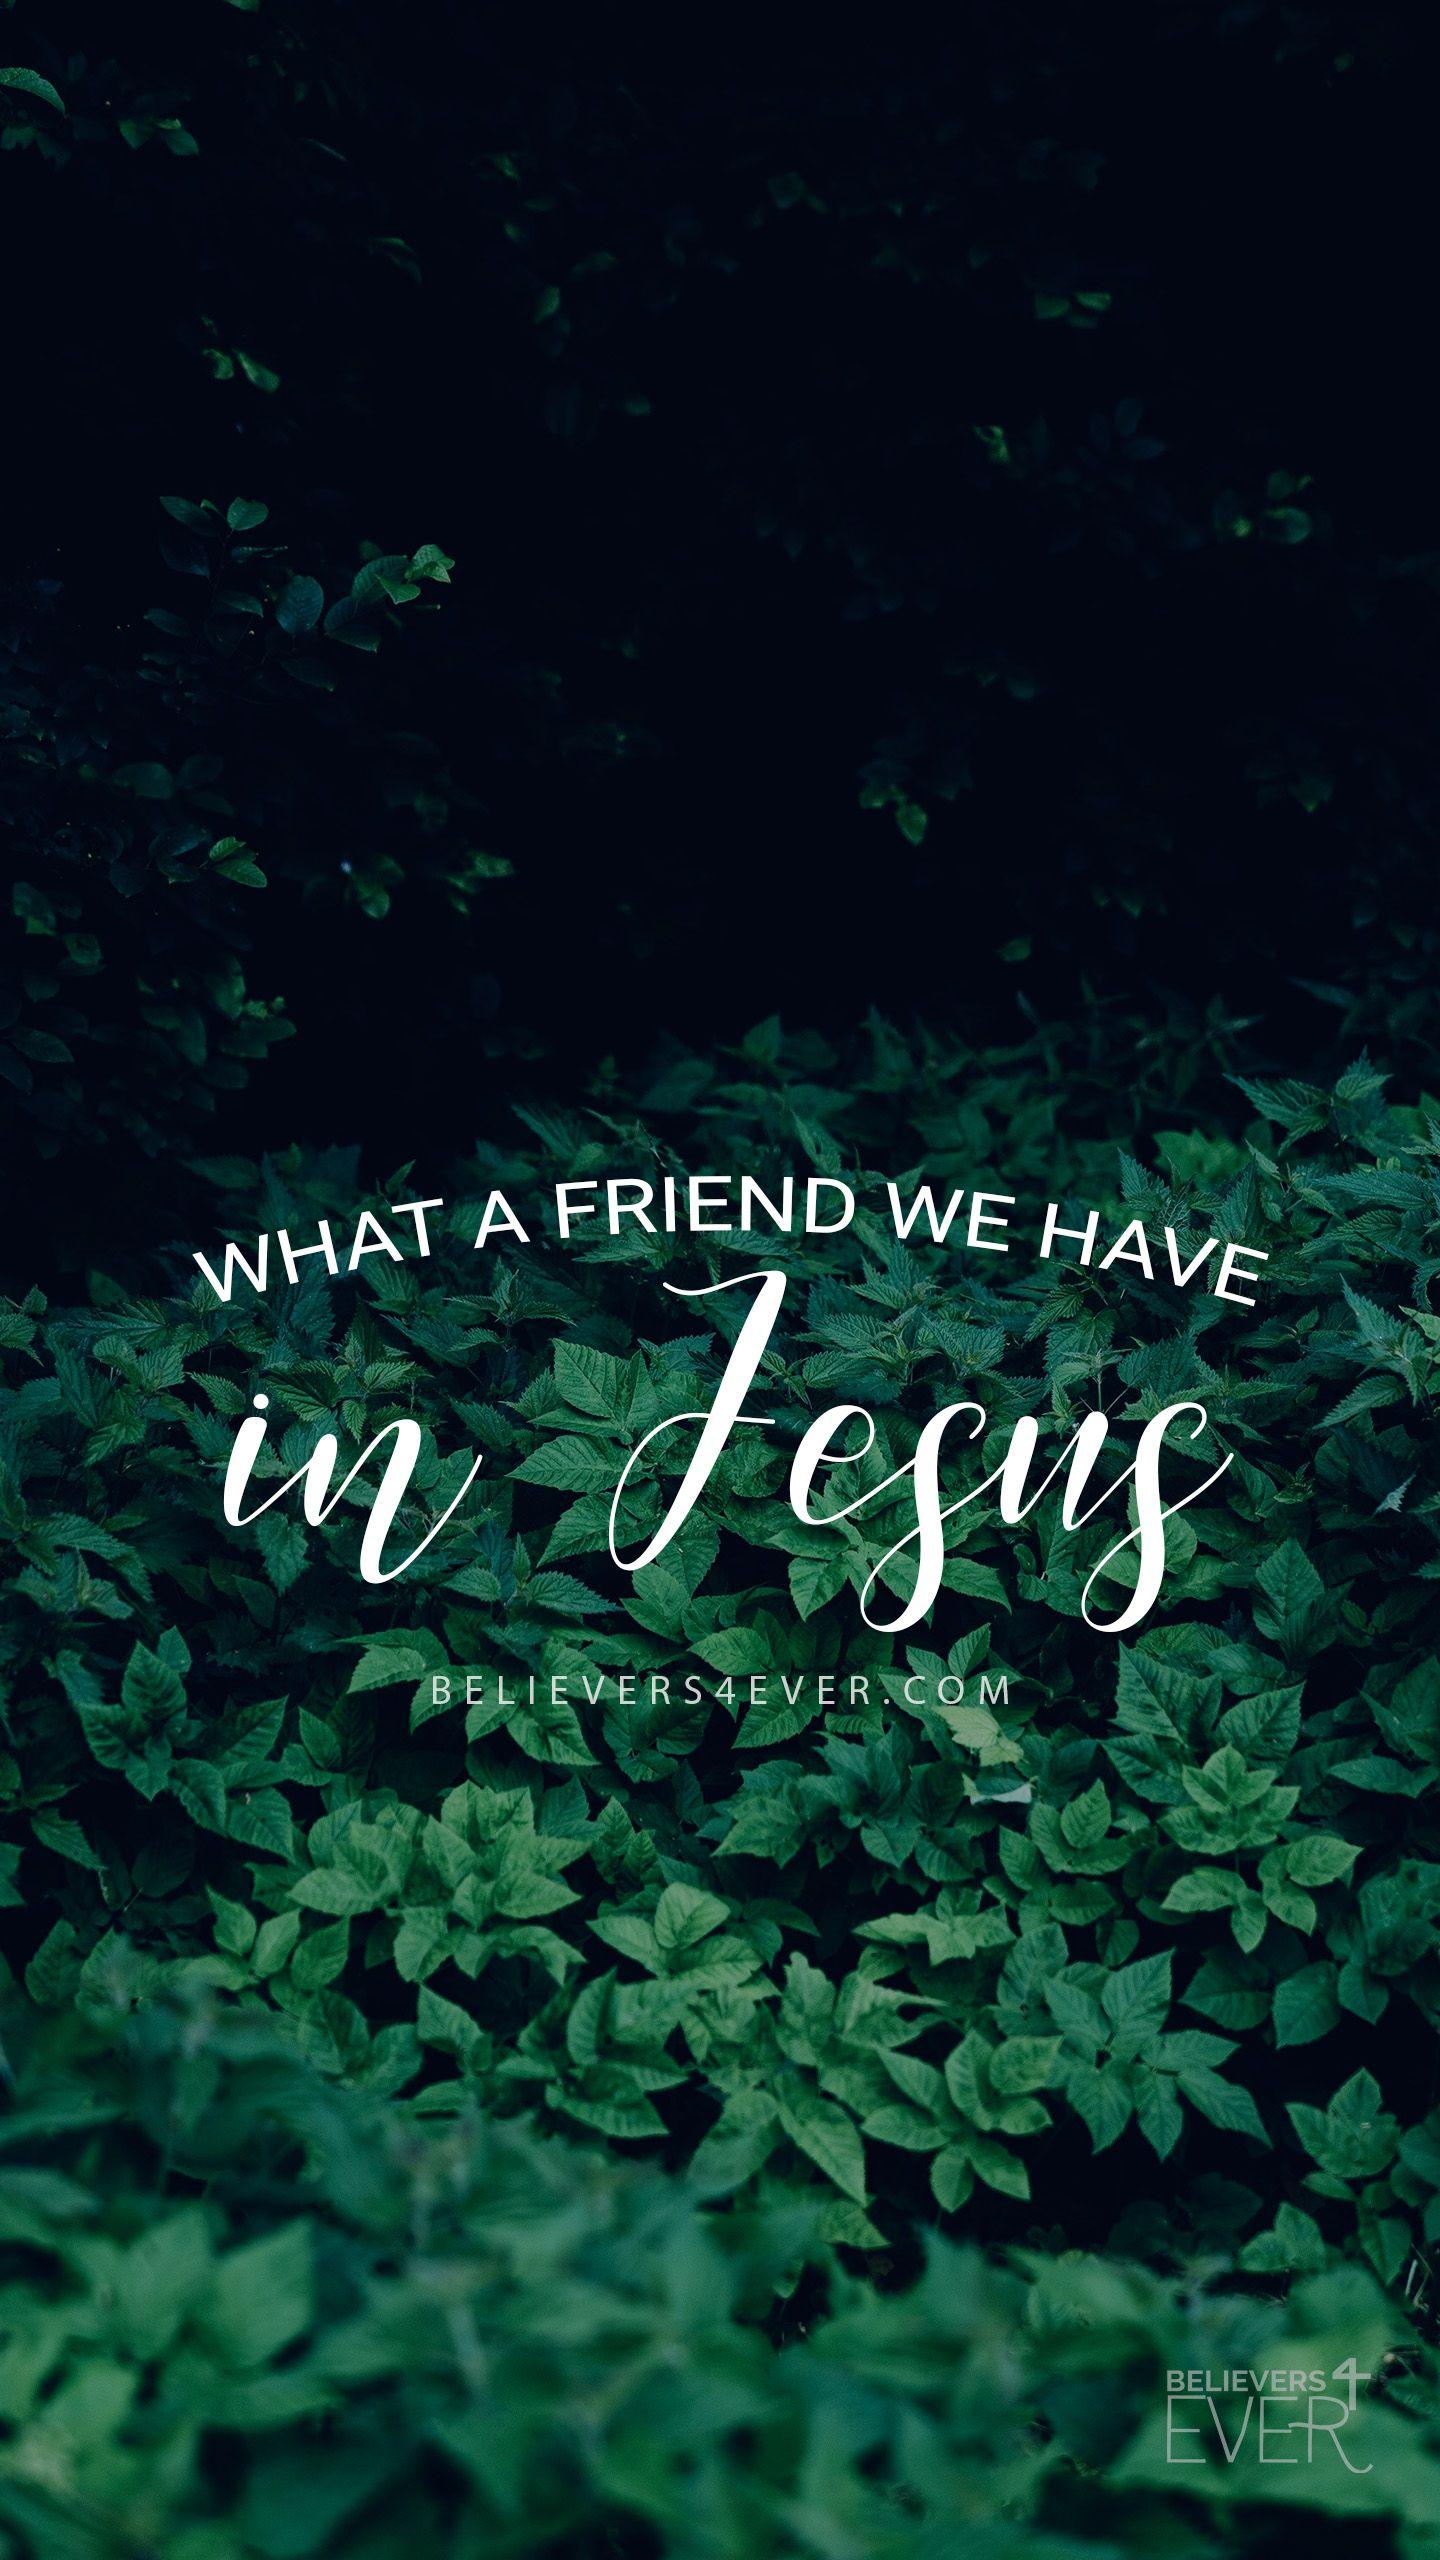 What a friend we have in jesus - Jesus